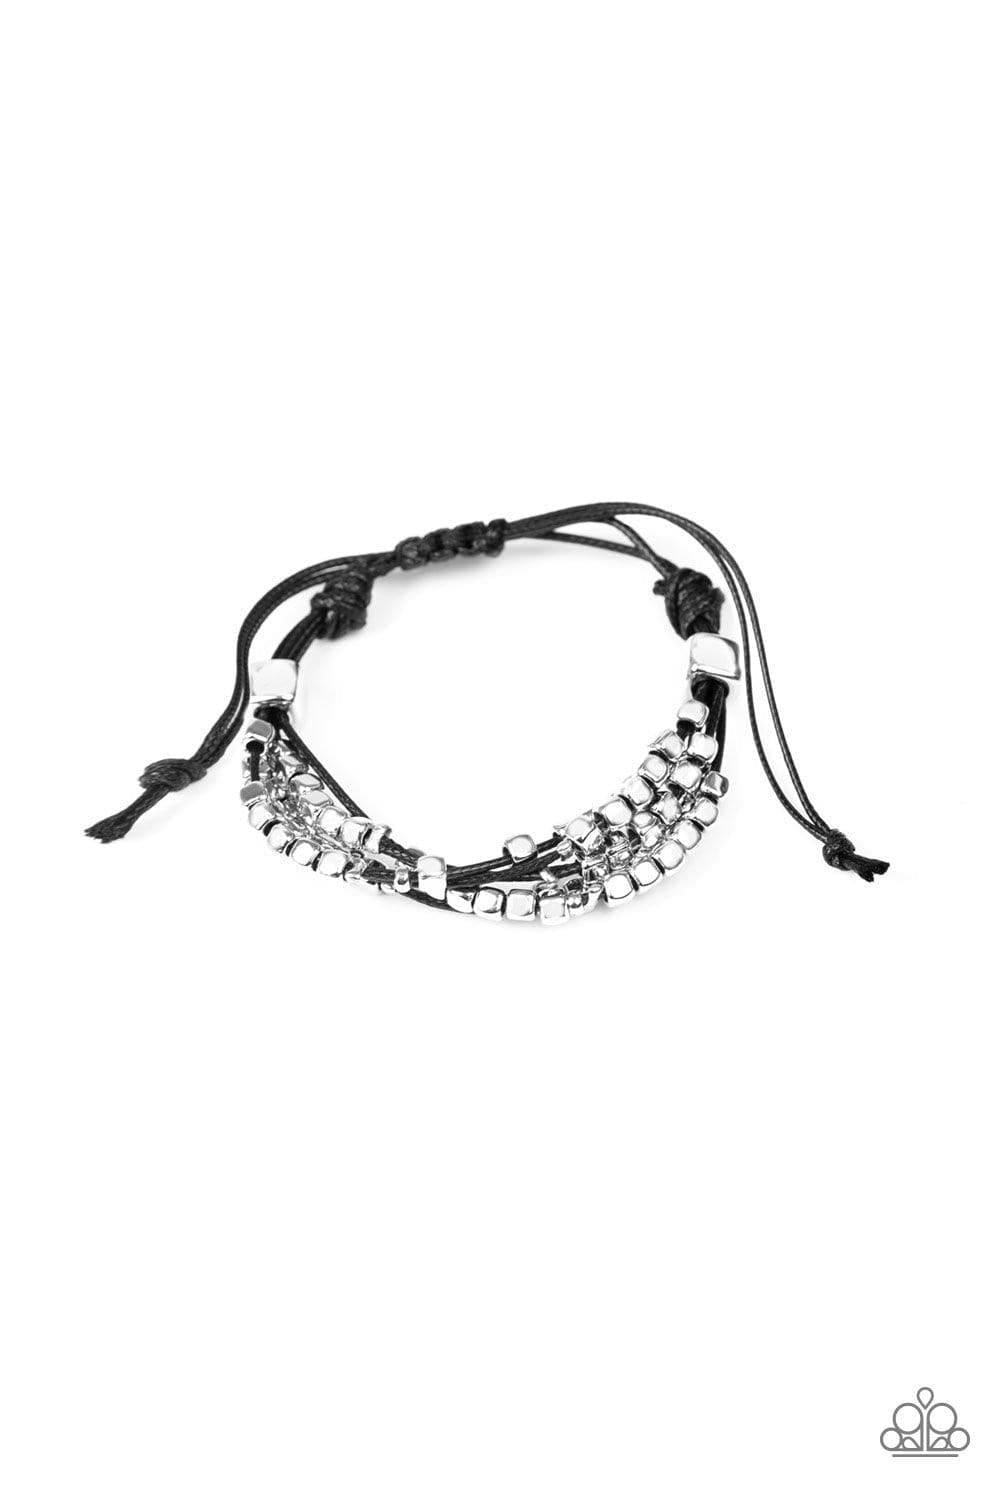 Paparazzi Accessories - Modern Minimalism - Black Bracelet - Bling by JessieK